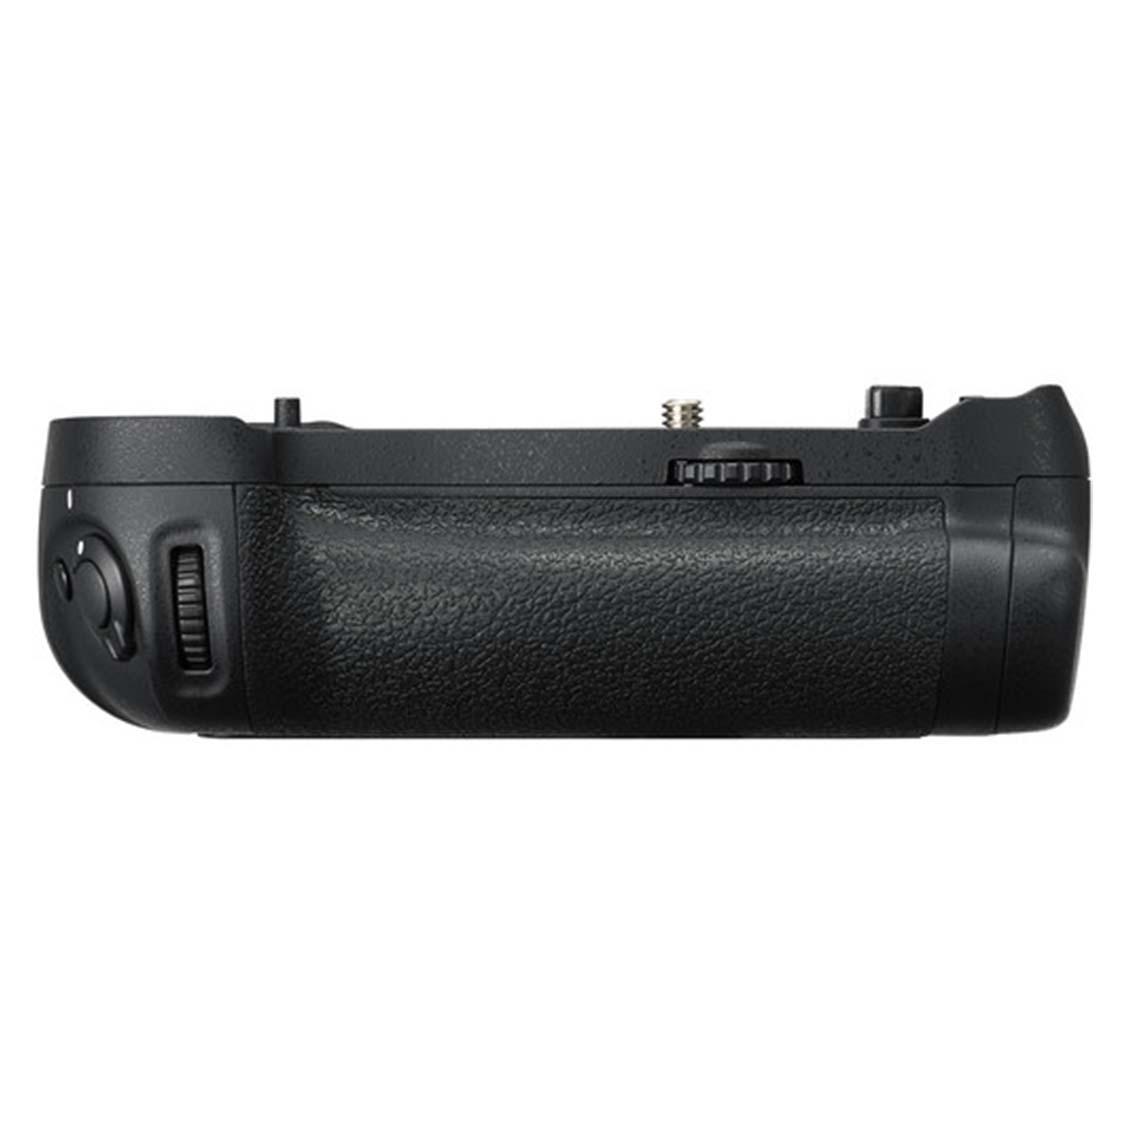 Nikon MB-D18 Multi Battery Grip for D850